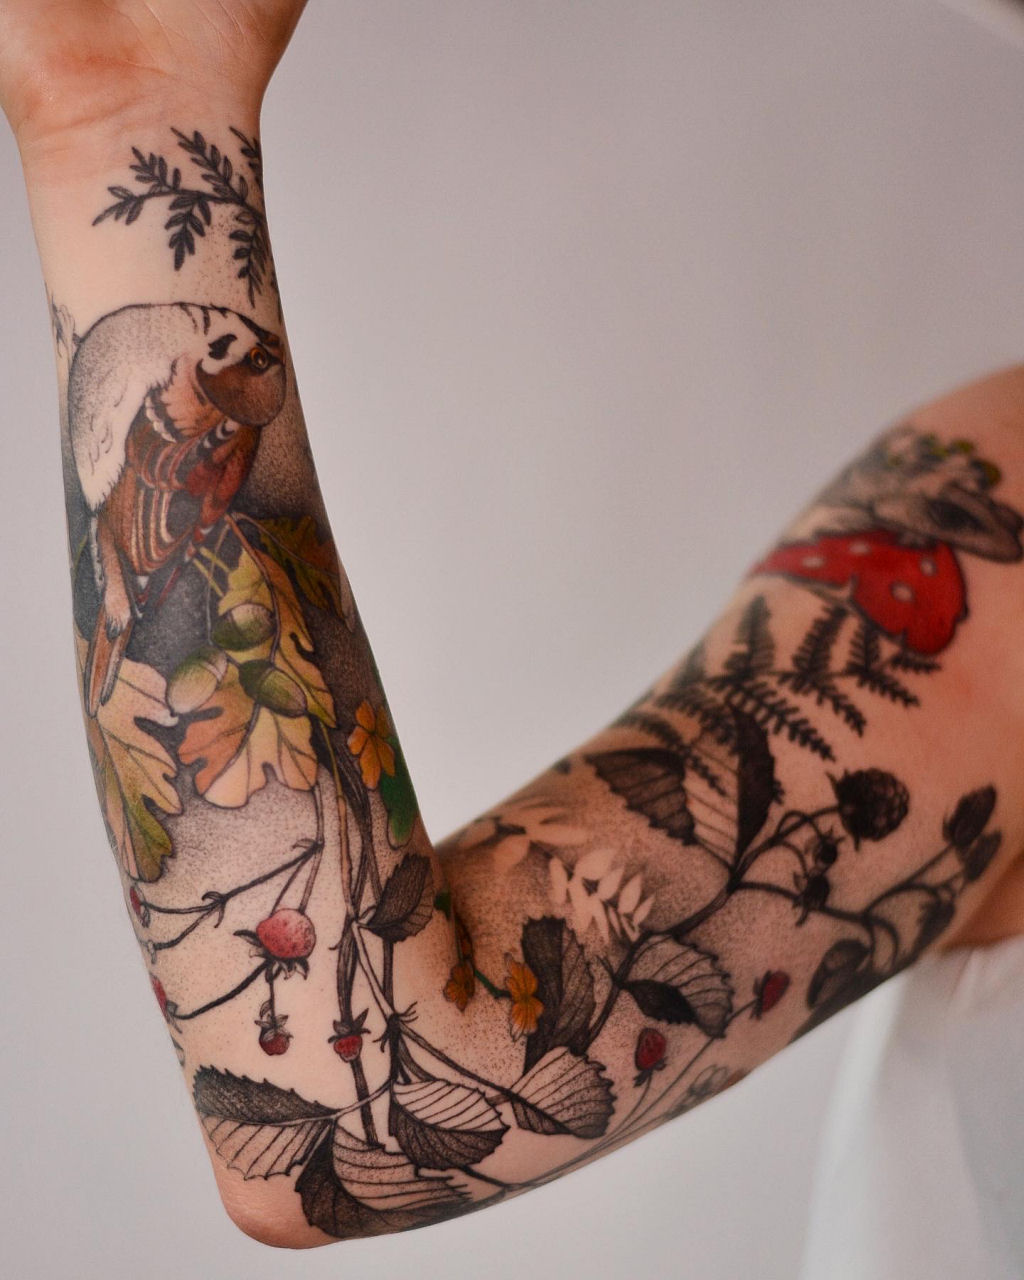 Tatuagens finamente delineadas combinam flora e fauna de forma delicada 05